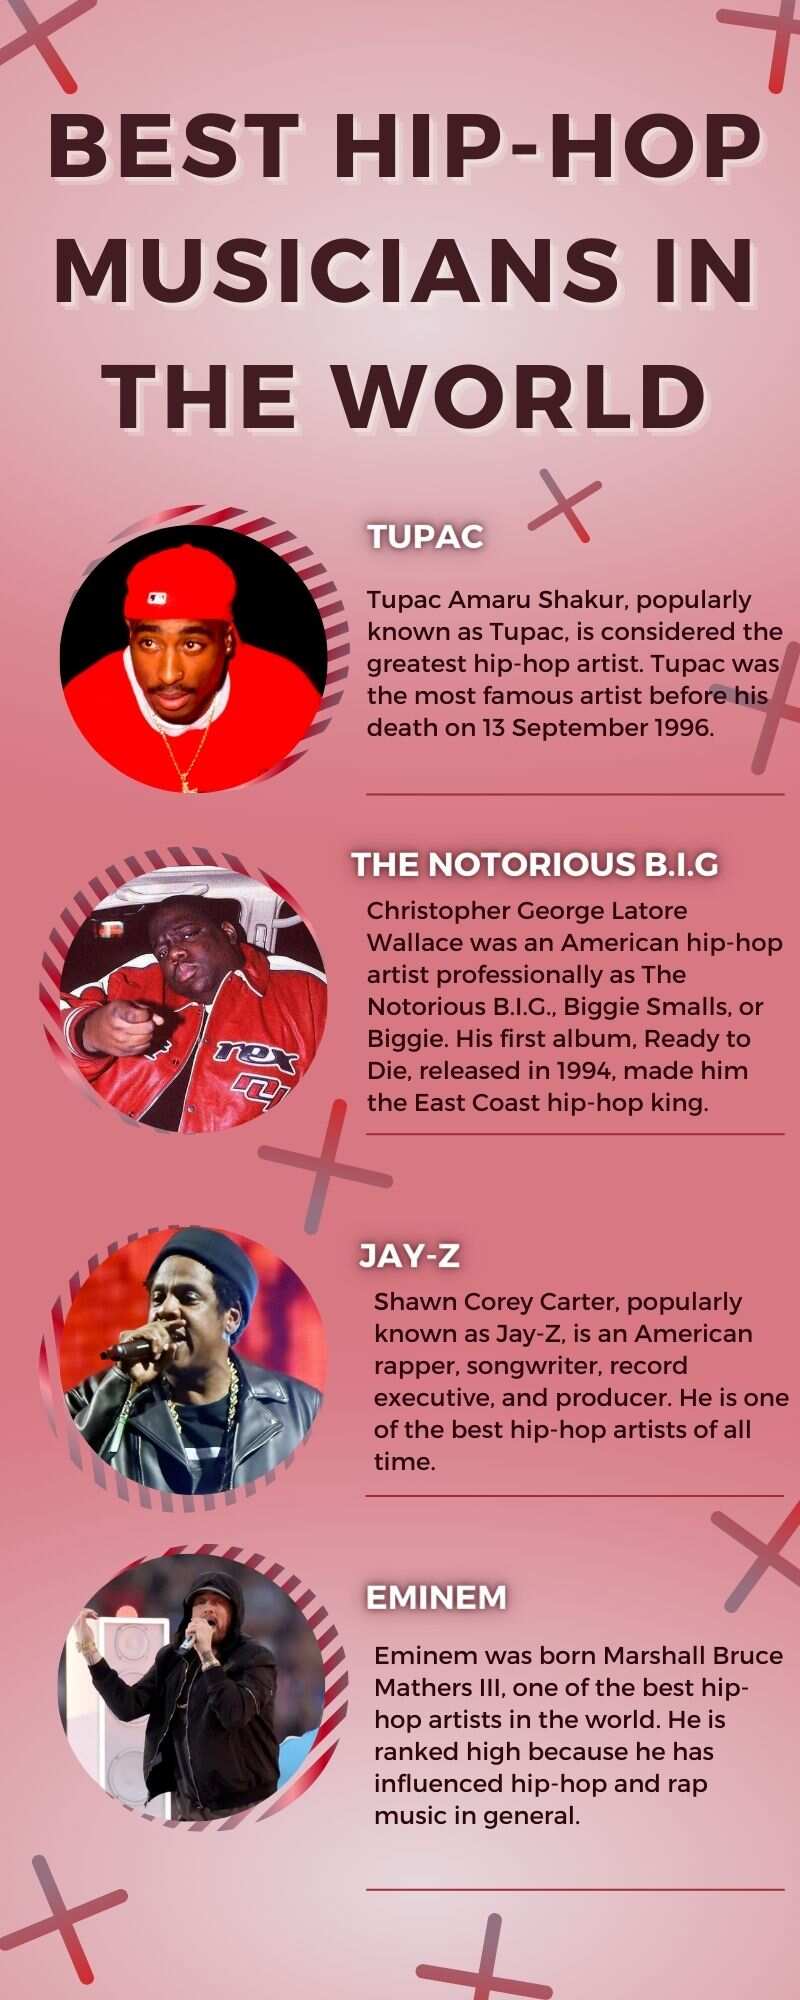 Best hip-hop musicians in the world